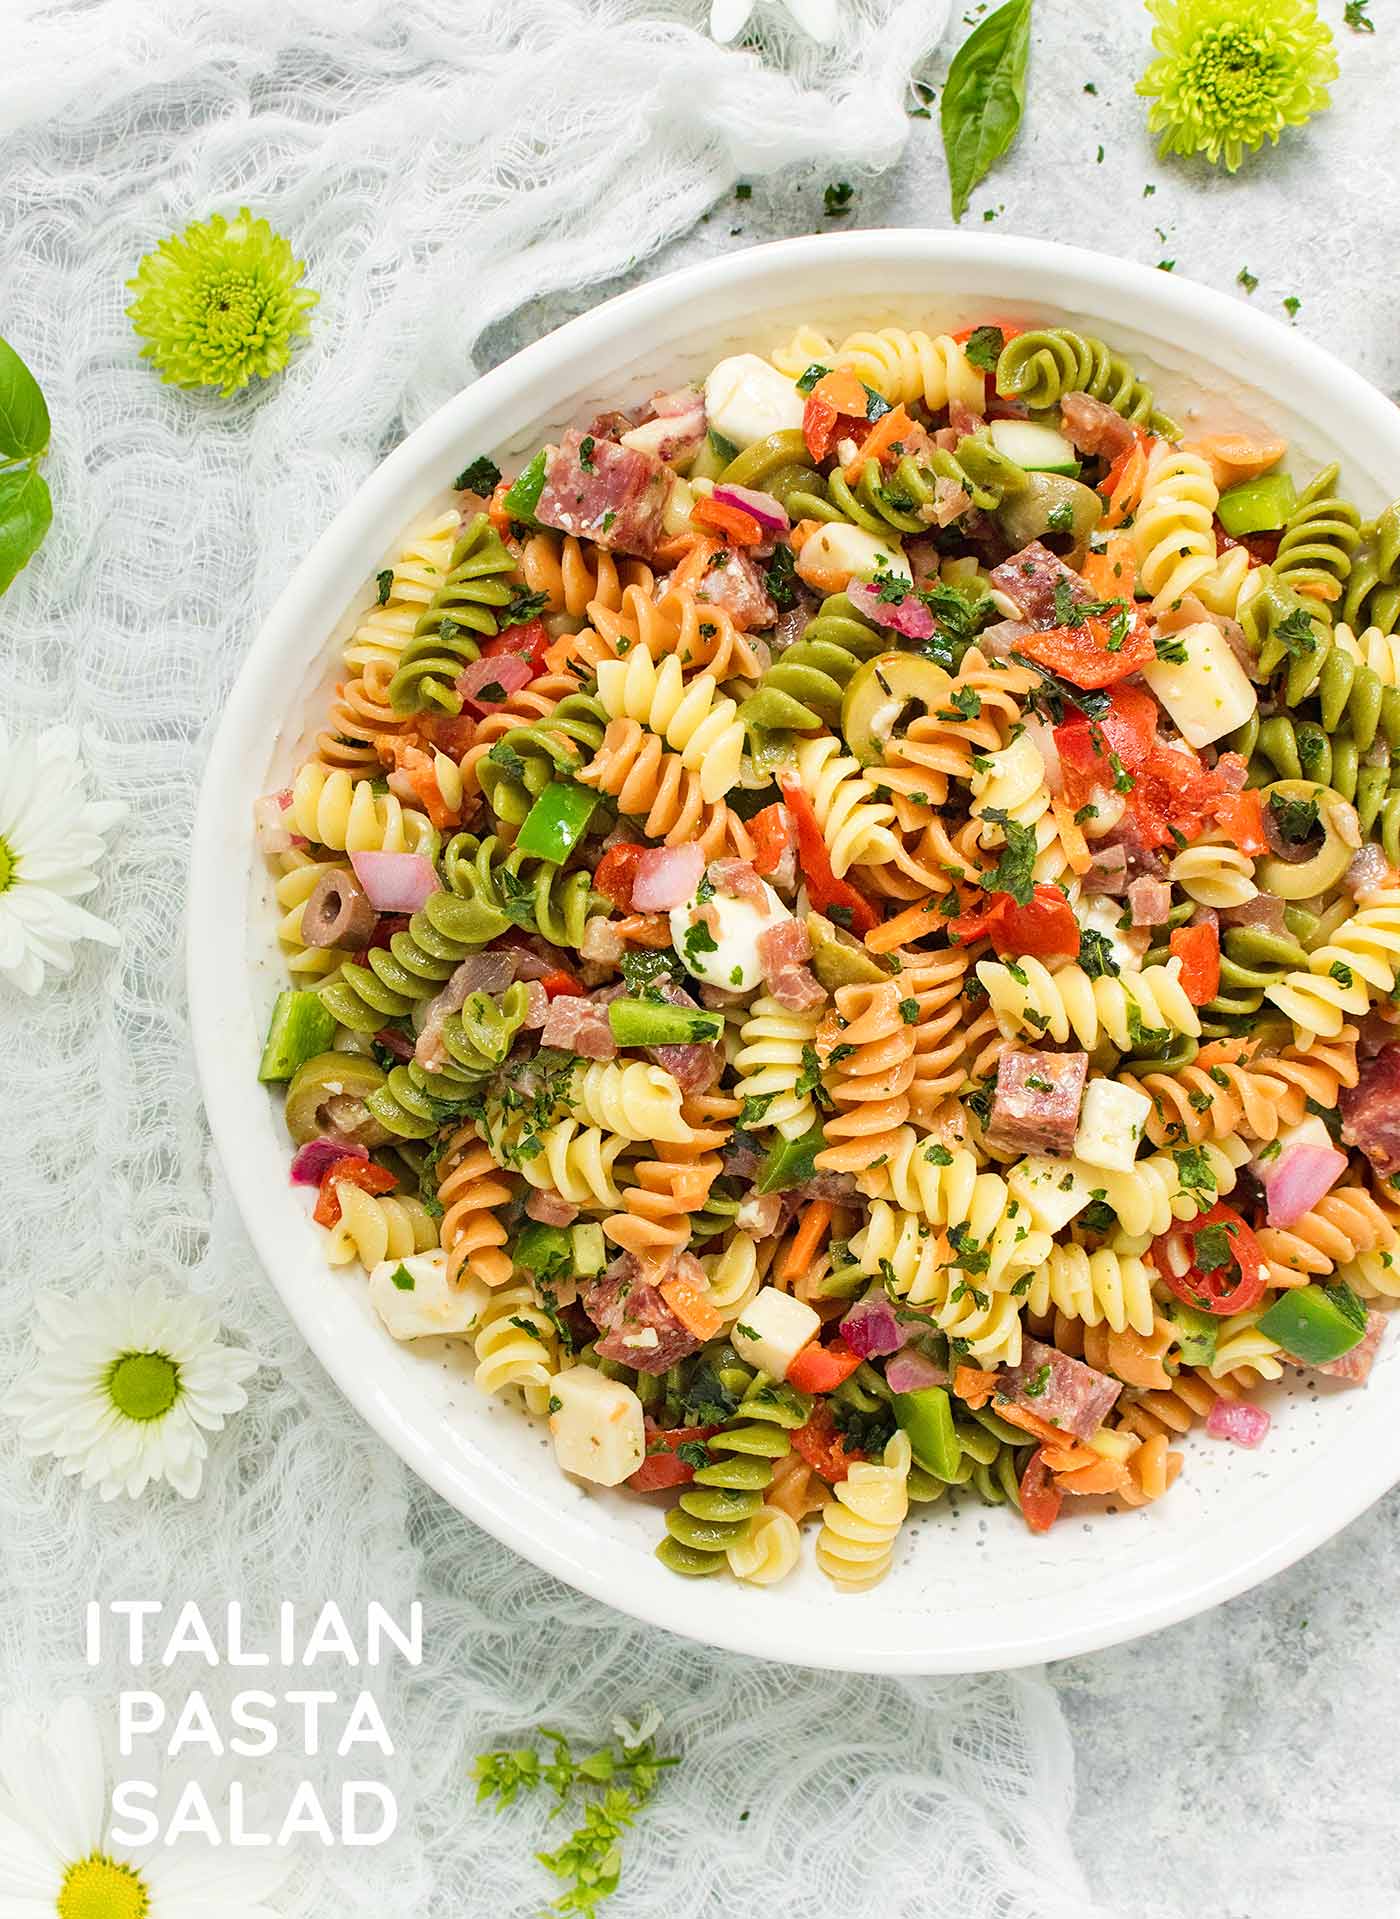 Italian Pasta Salad - Recipe at SoupAddict.com